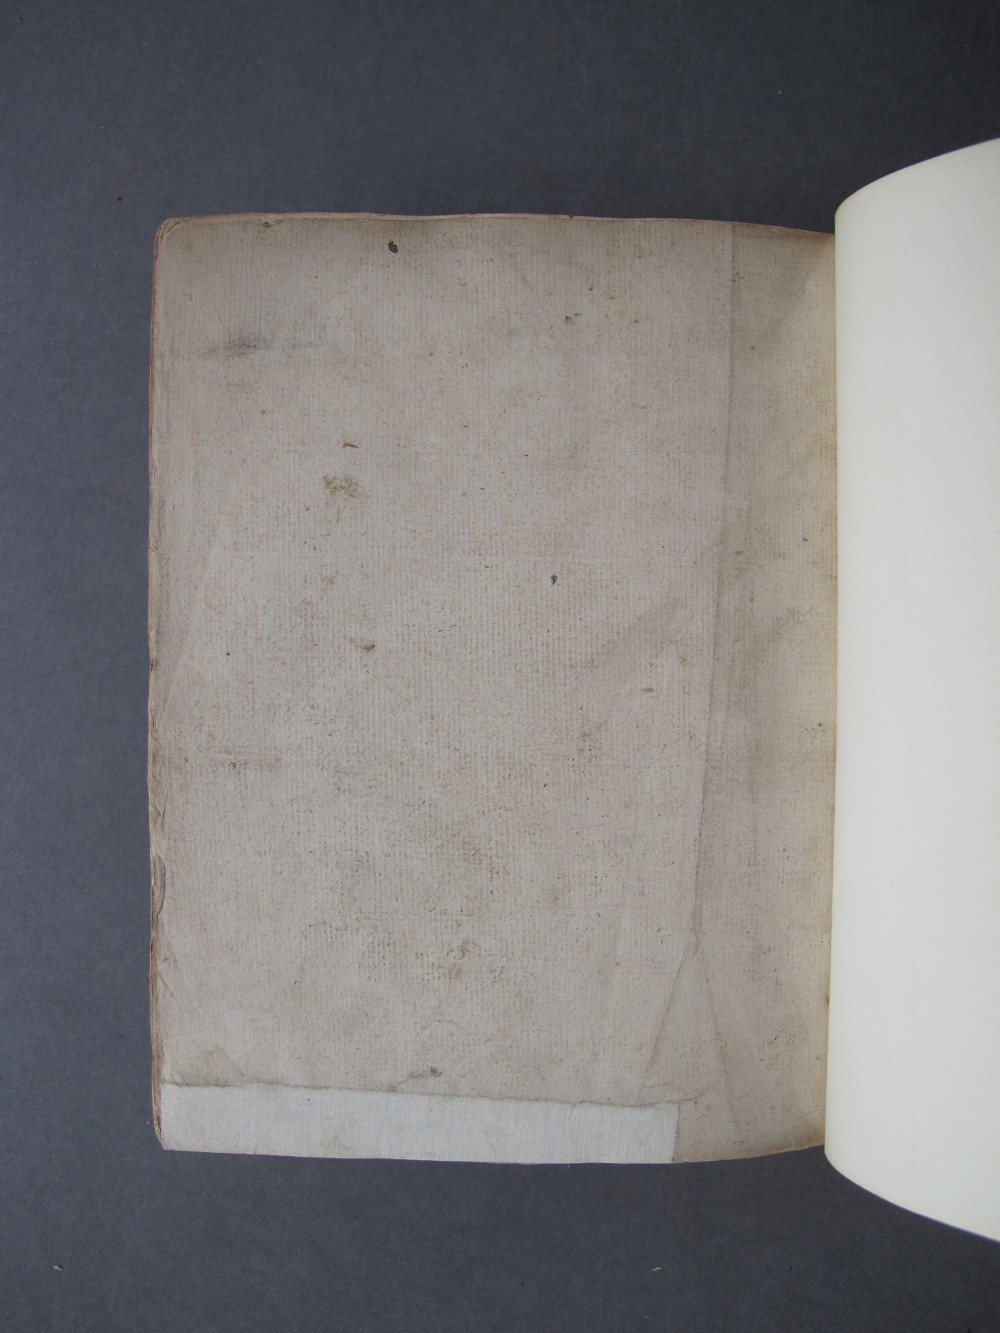 Folio 412 verso